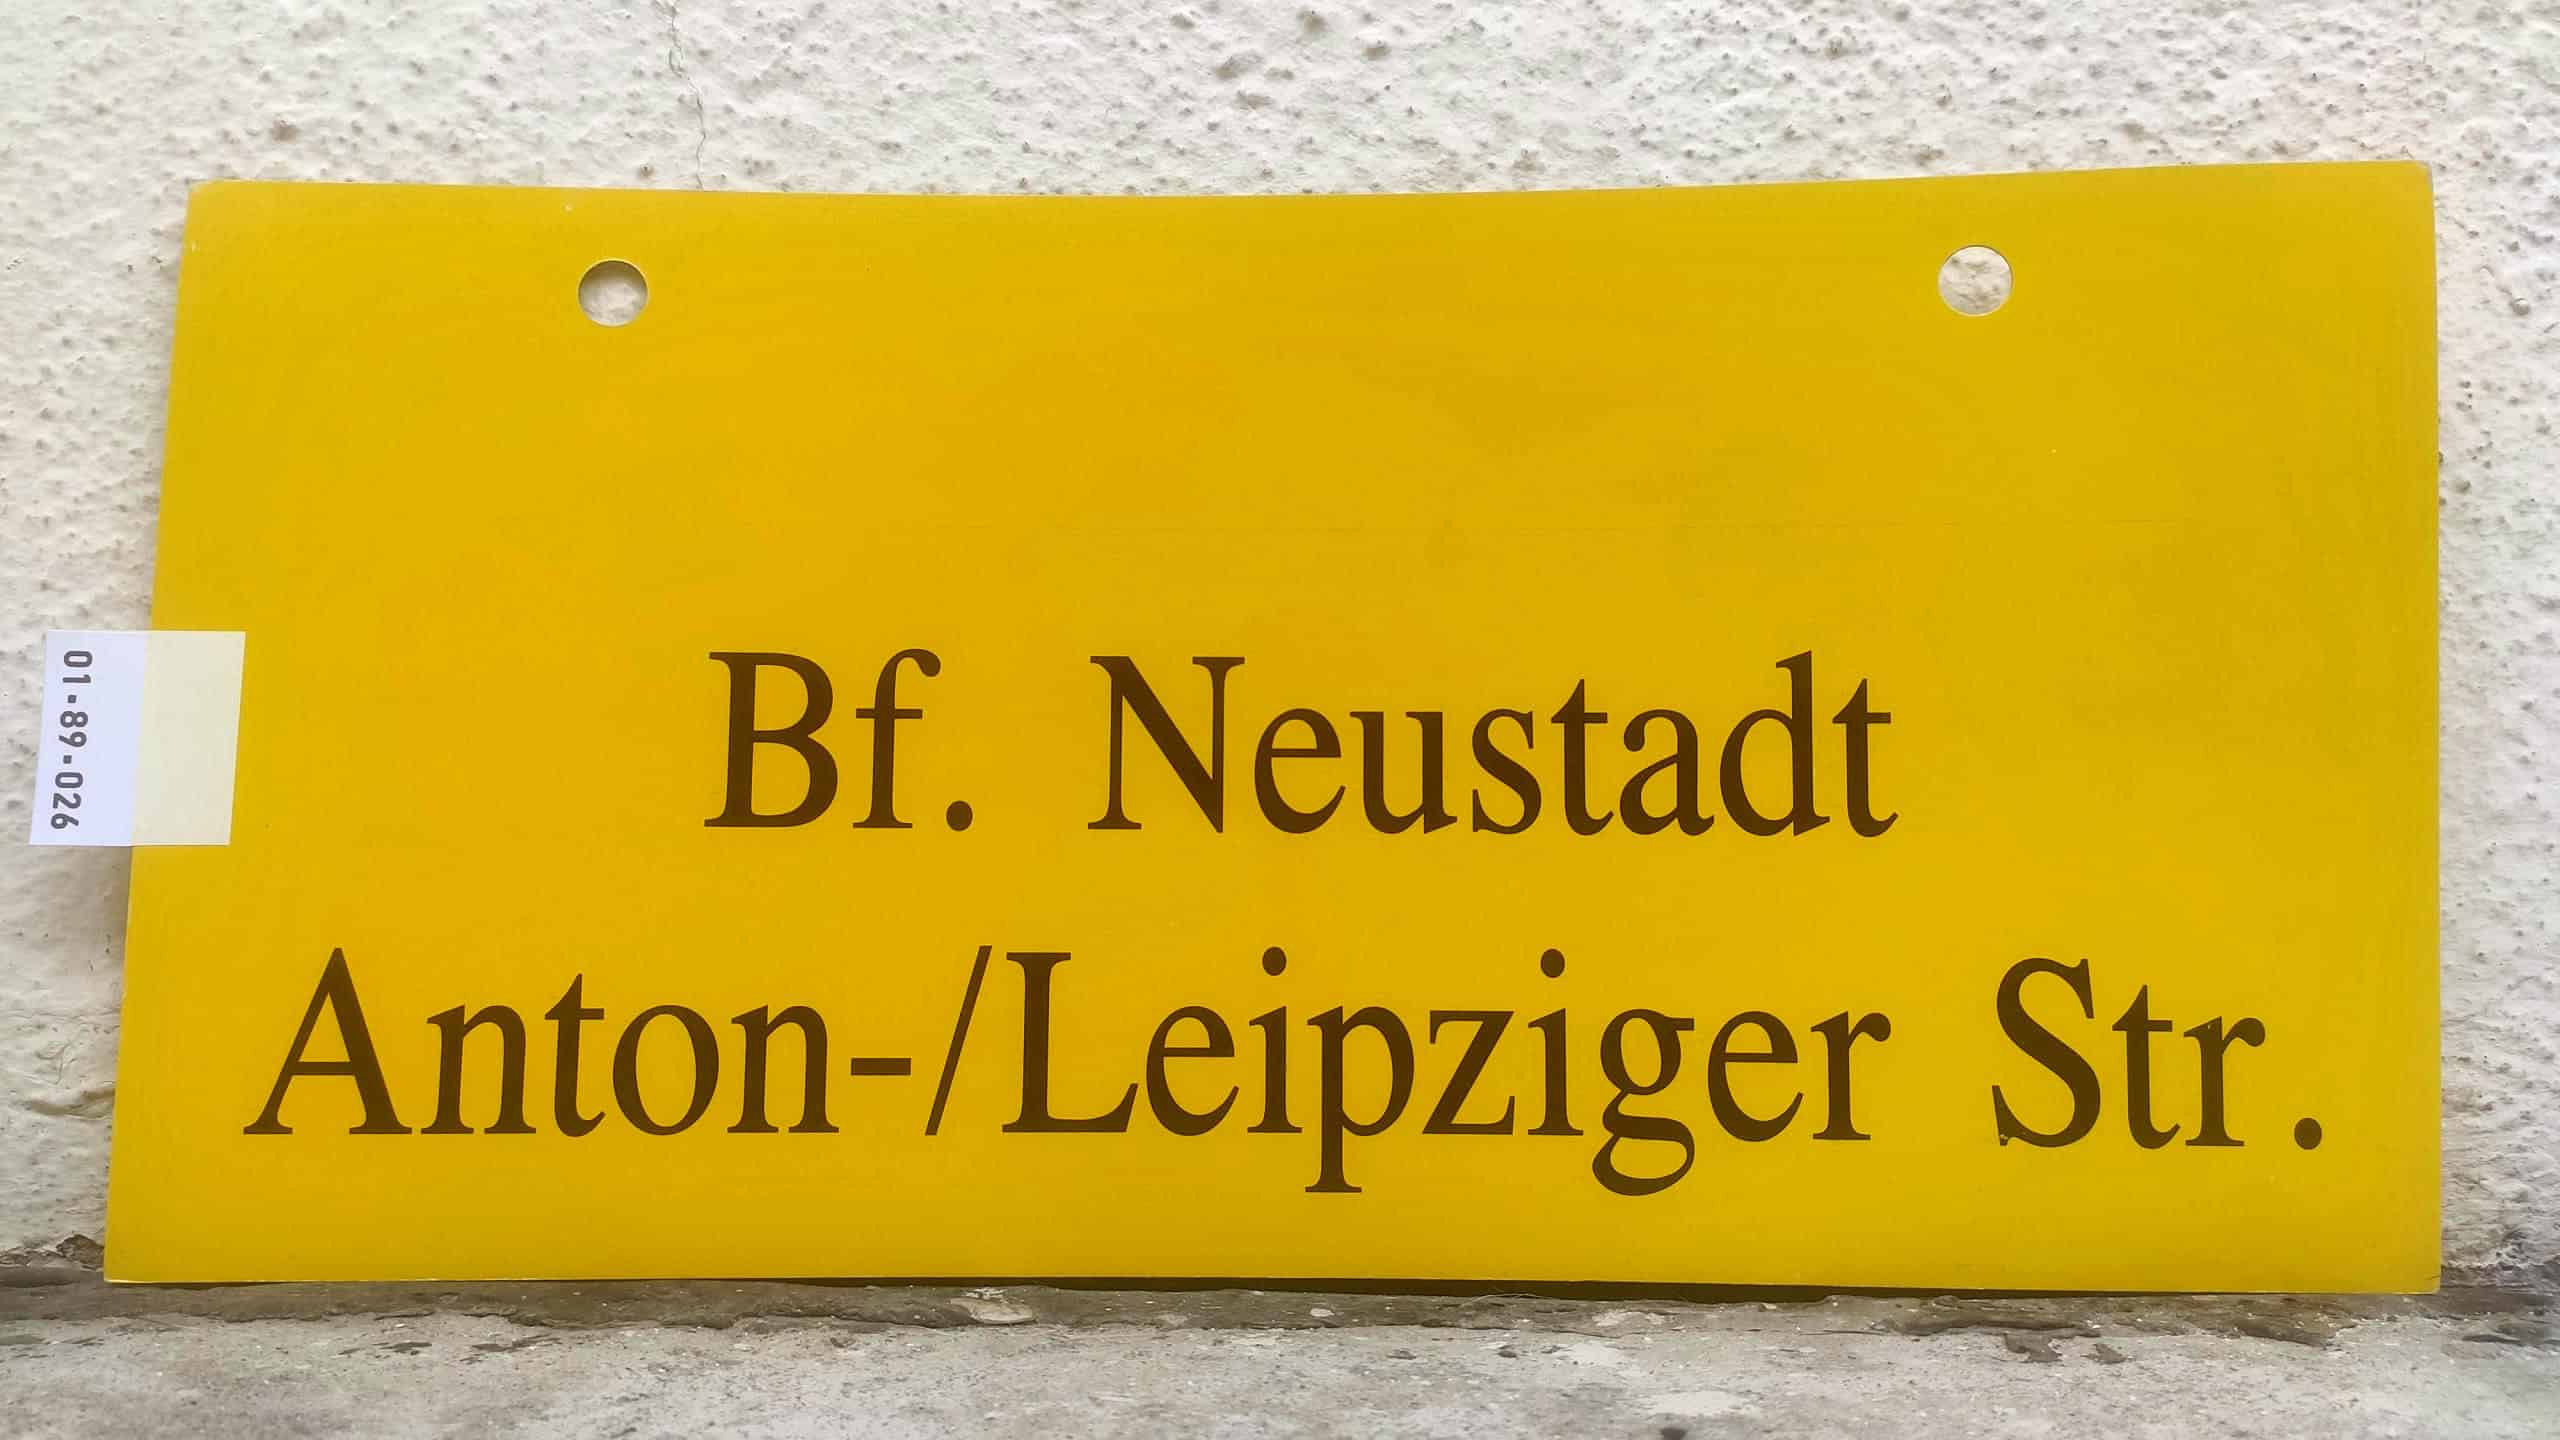 Bf. Neustadt Anton-/Leipziger Str.